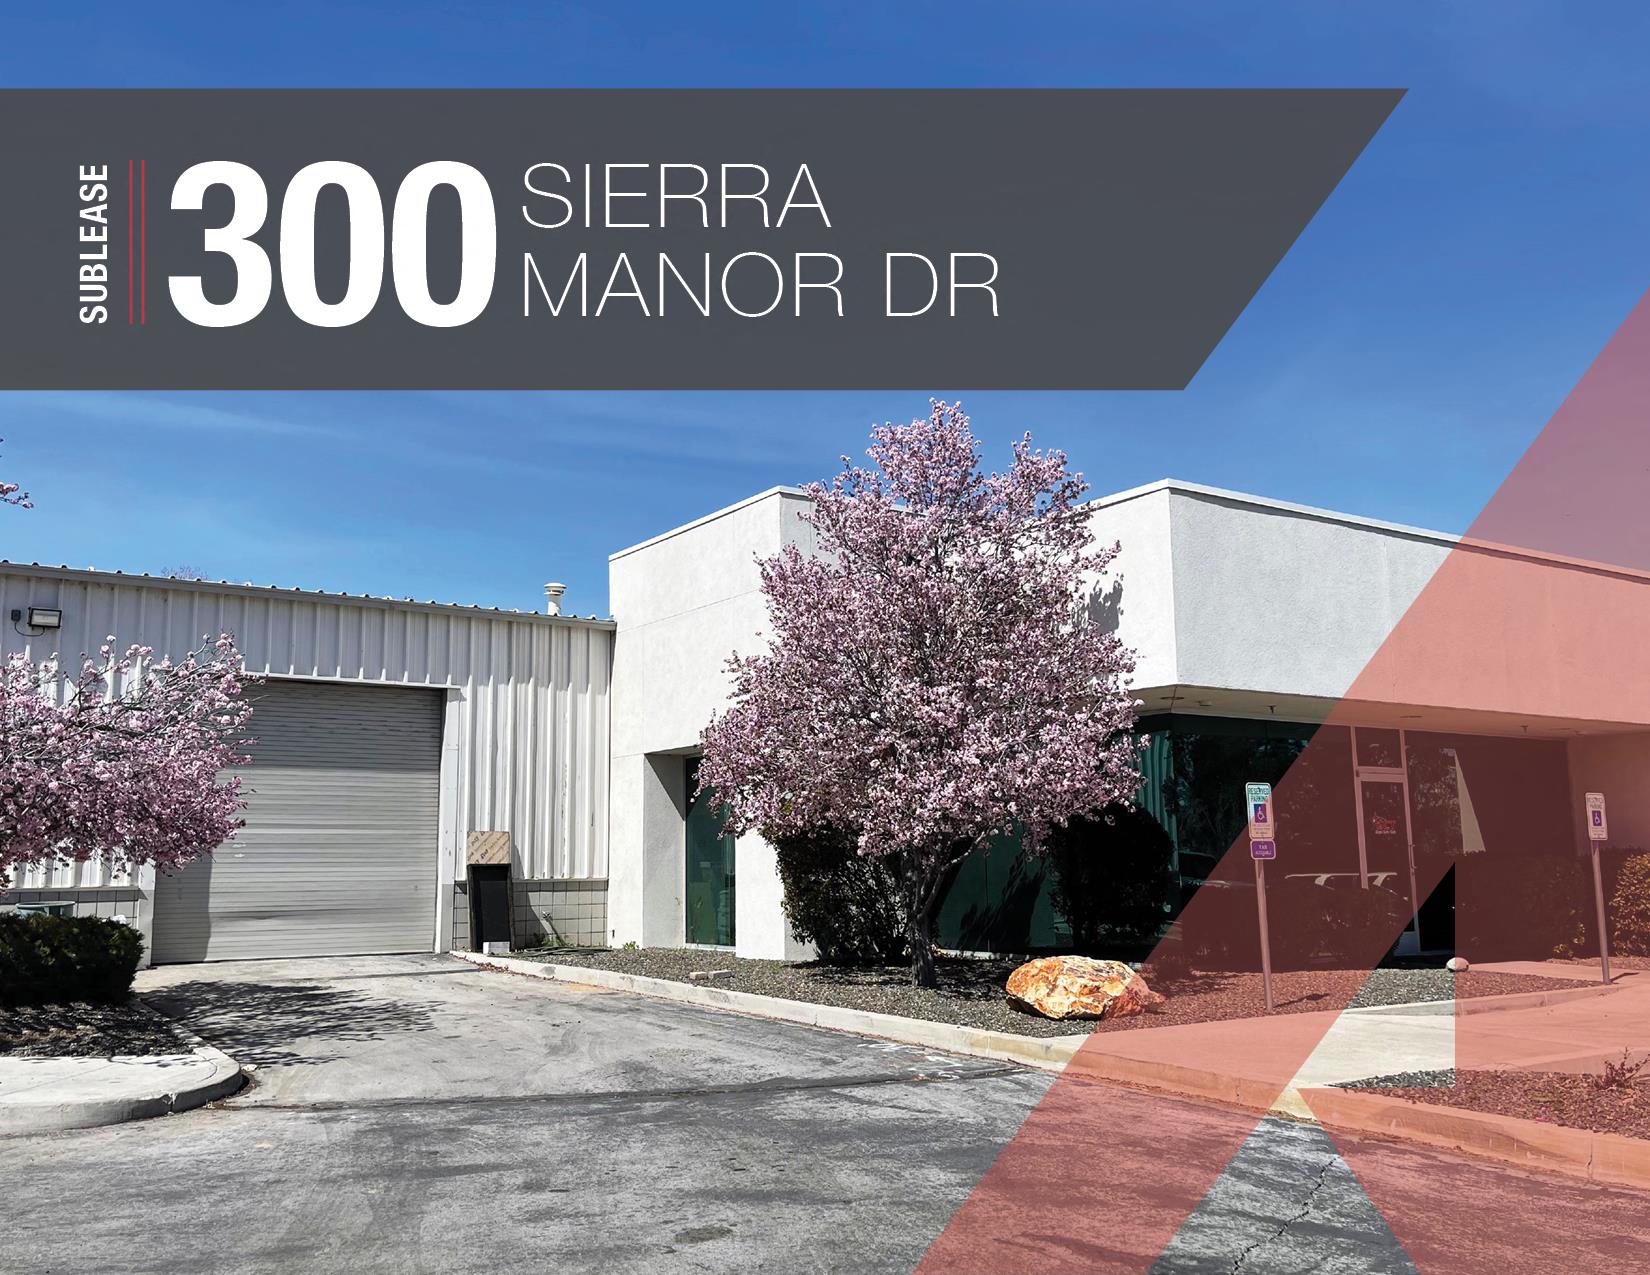 300 Sierra Manor Dr, Reno, NV 89511
 Reno,NV